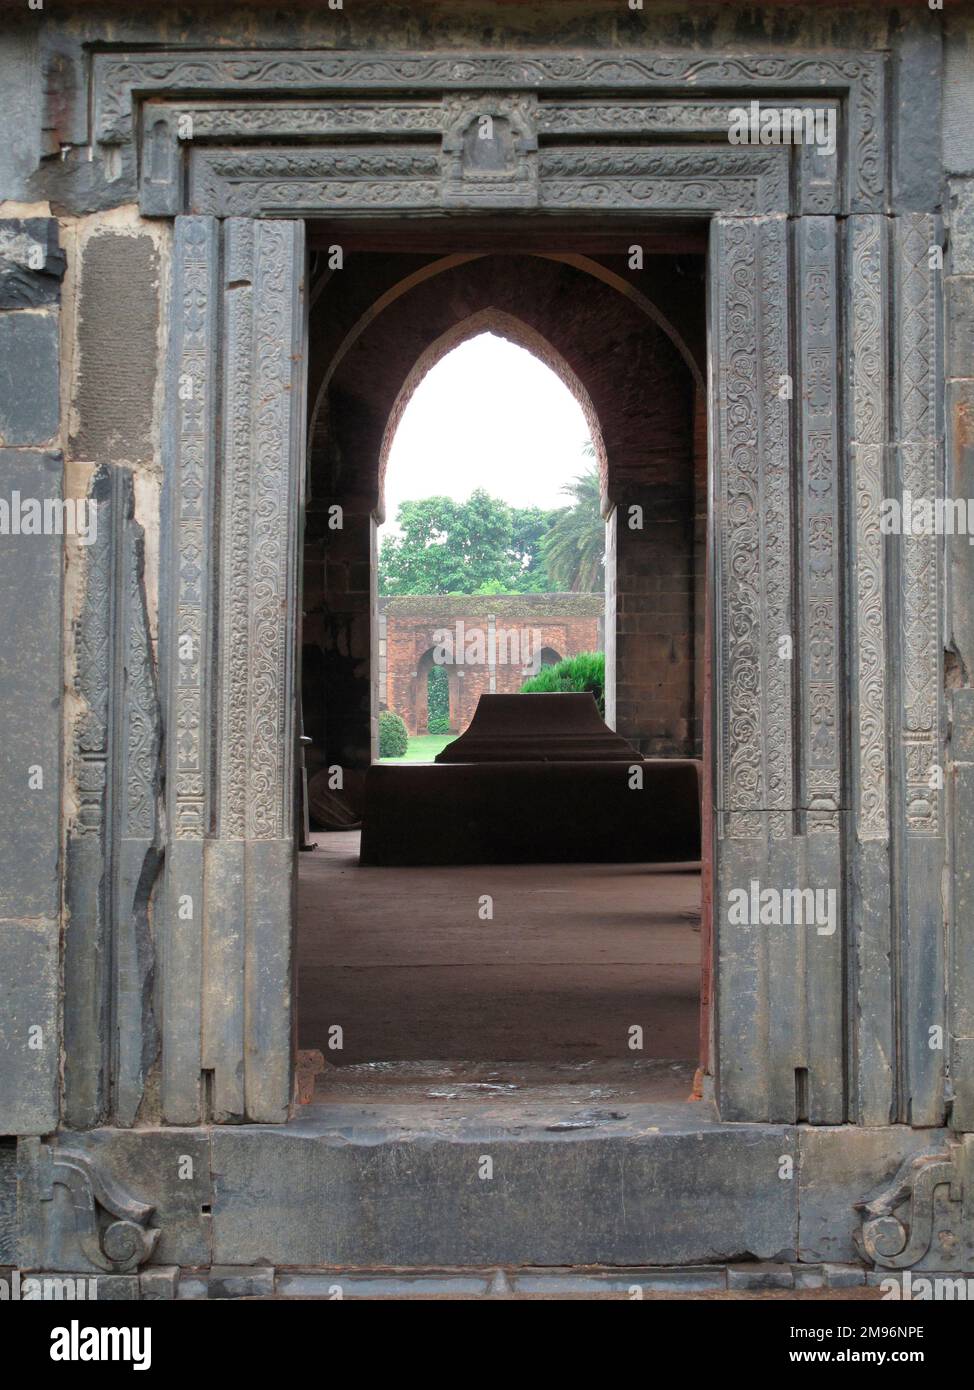 India, West Bengal, Pandua: Adina Mosque or Jami Masjid (1364 AD), view into the interior, tomb. Stock Photo